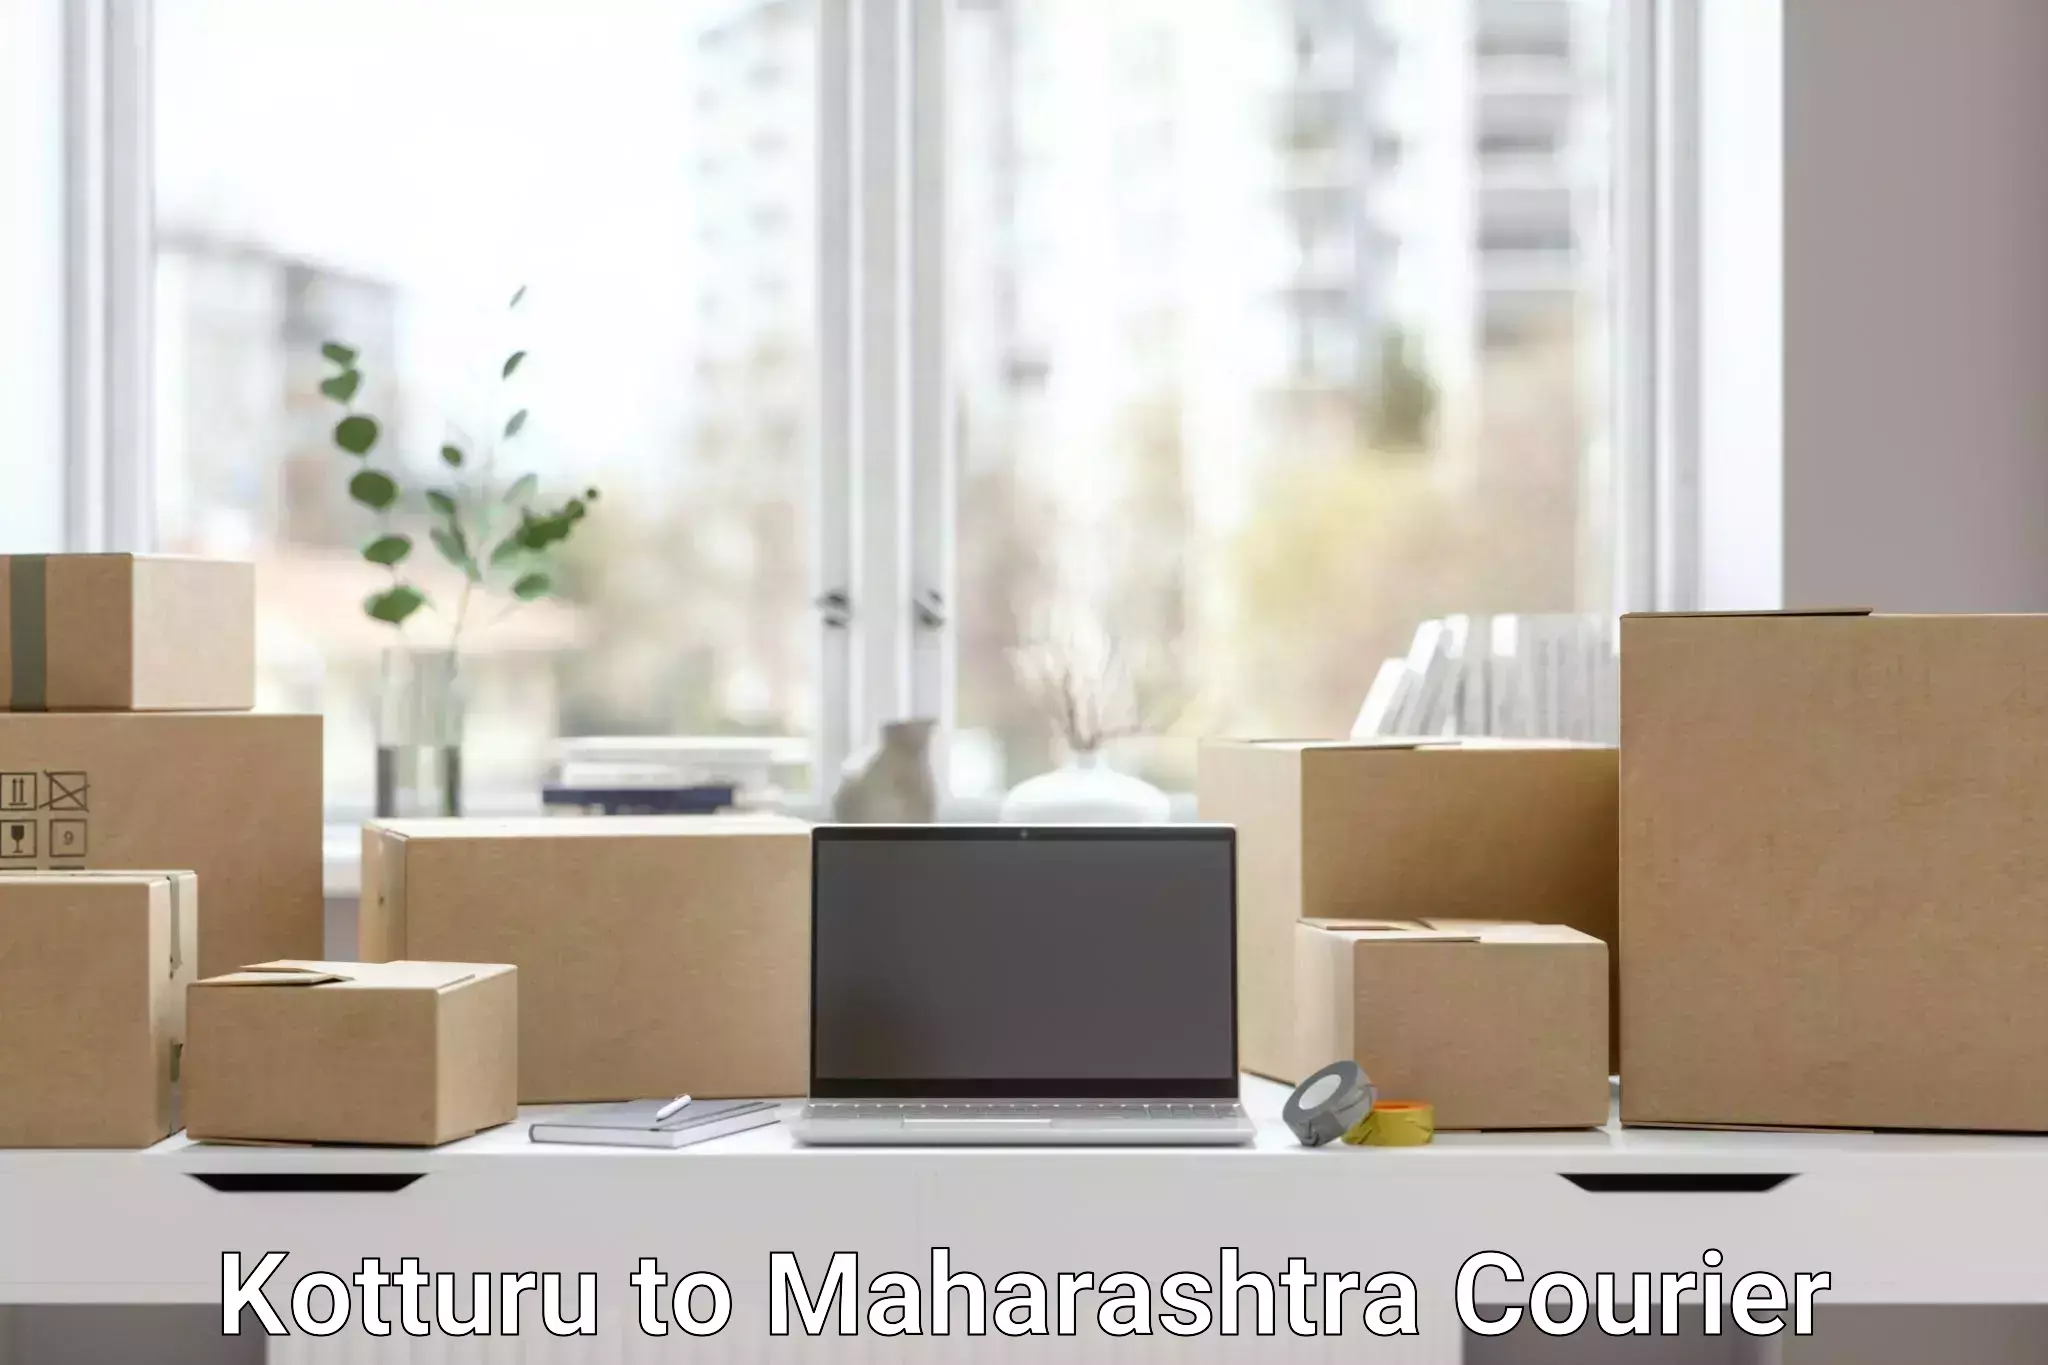 Supply chain delivery Kotturu to Maharashtra